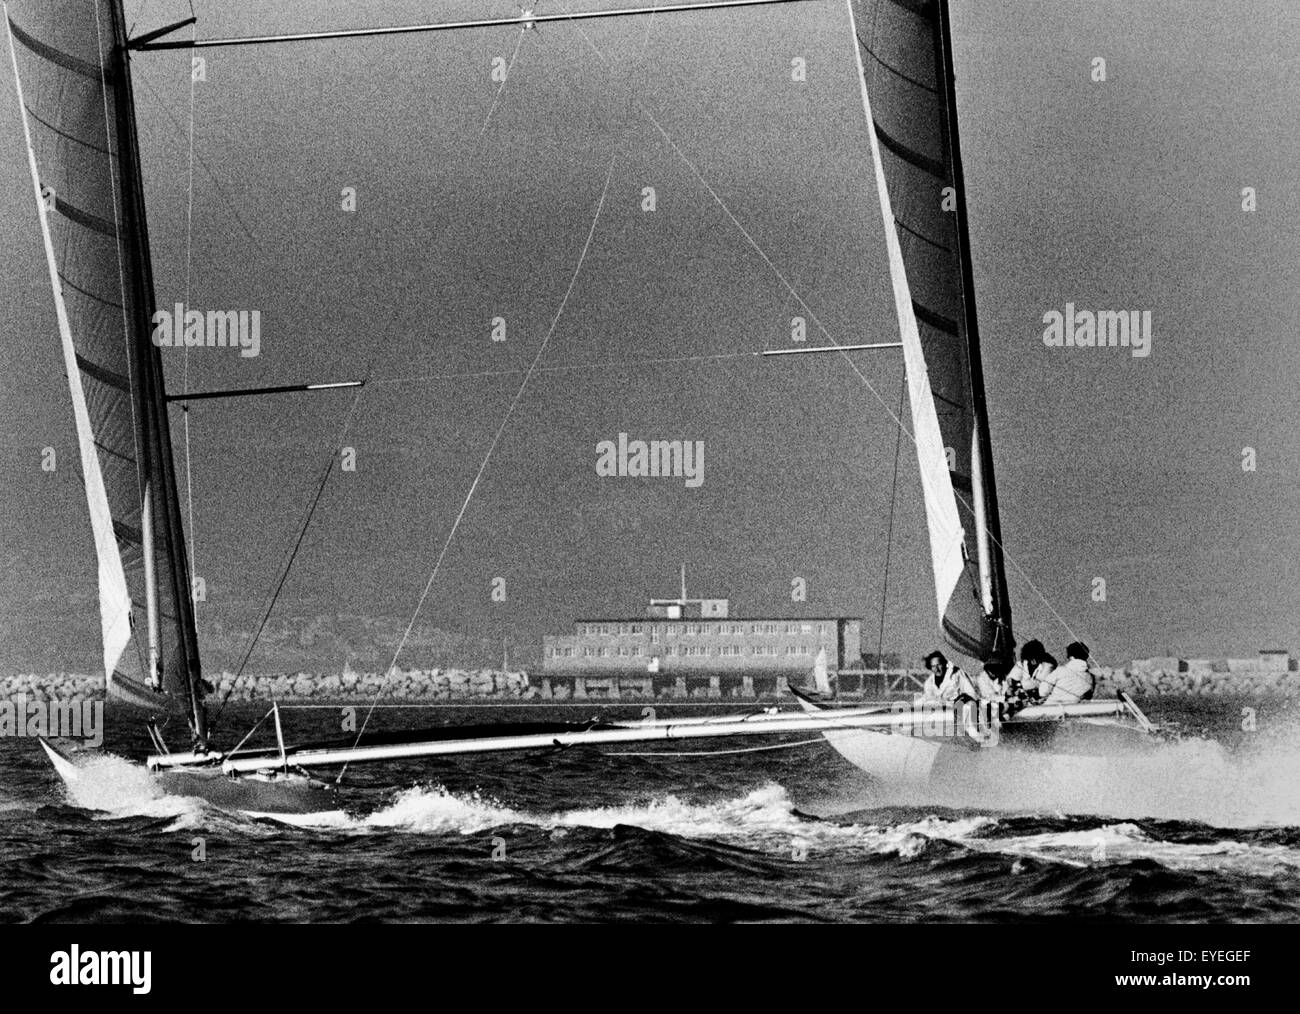 AJAXNETPHOTO. - 1978. PORTLAND, Inglaterra. - Velocidad de Weymouth semana - Catamarán CROSSBOW II EN VELOCIDAD EN PORTLAND Harbour. Foto:Jonathan EASTLAND/AJAX REF:WEY 78 Foto de stock